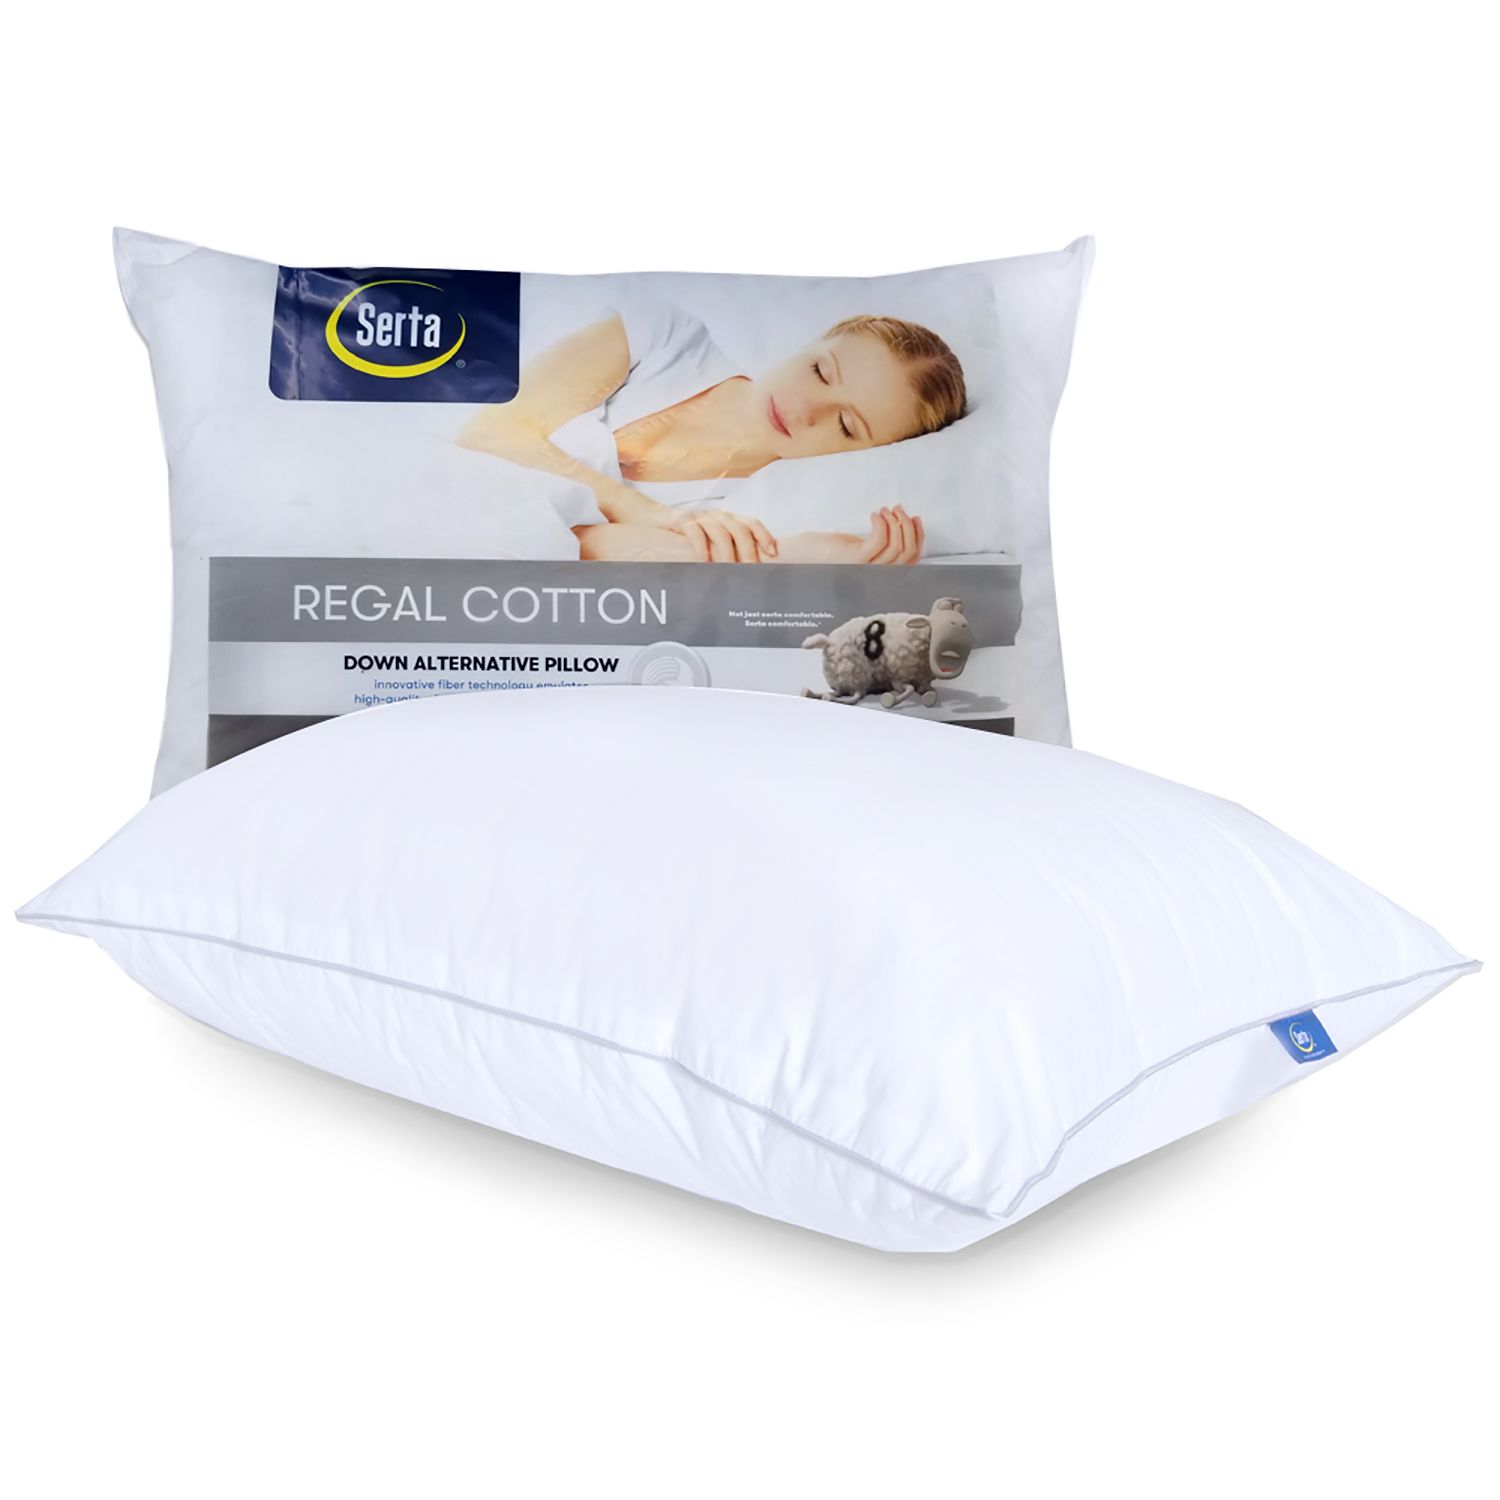 Serta Regal Cotton Pillow